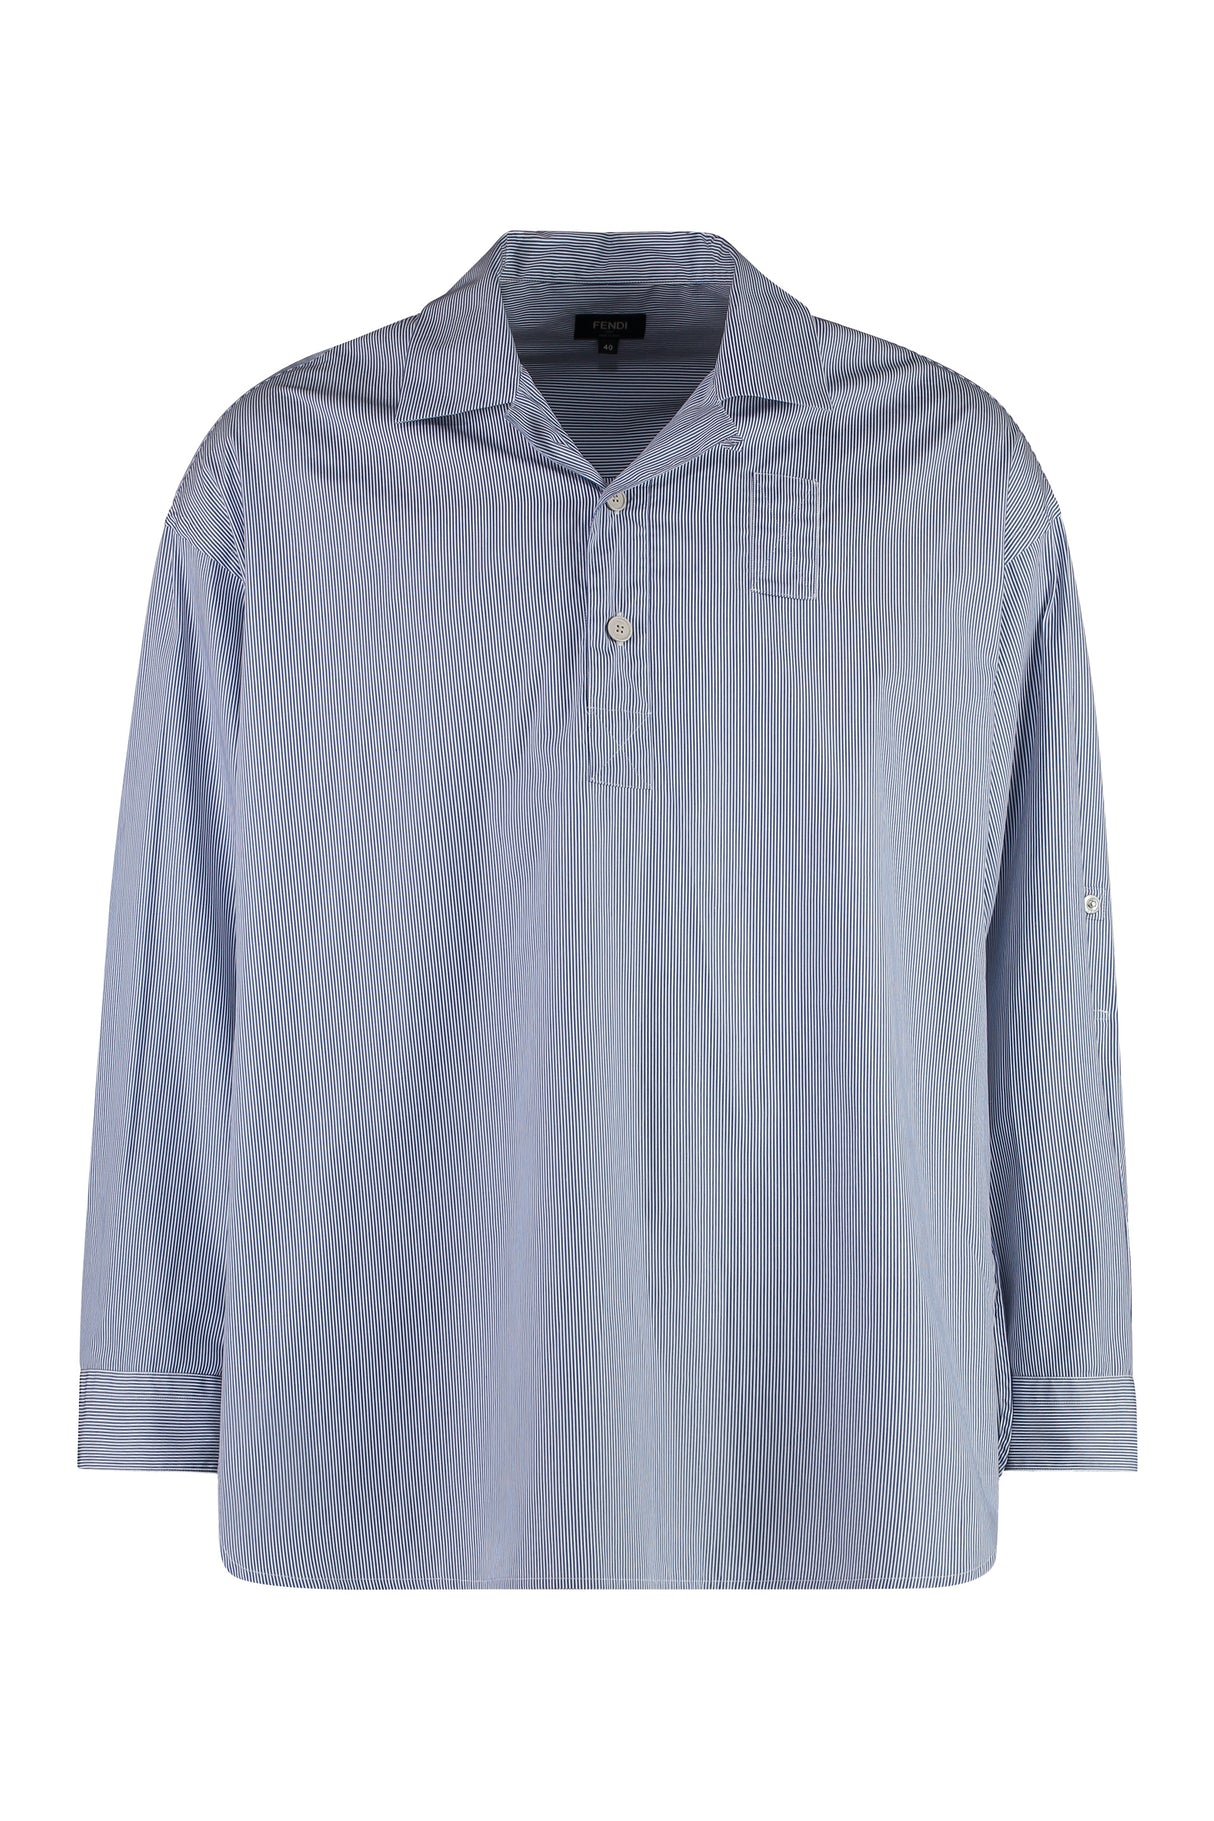 FENDI Navy Striped Cotton Short Sleeve Shirt for Men